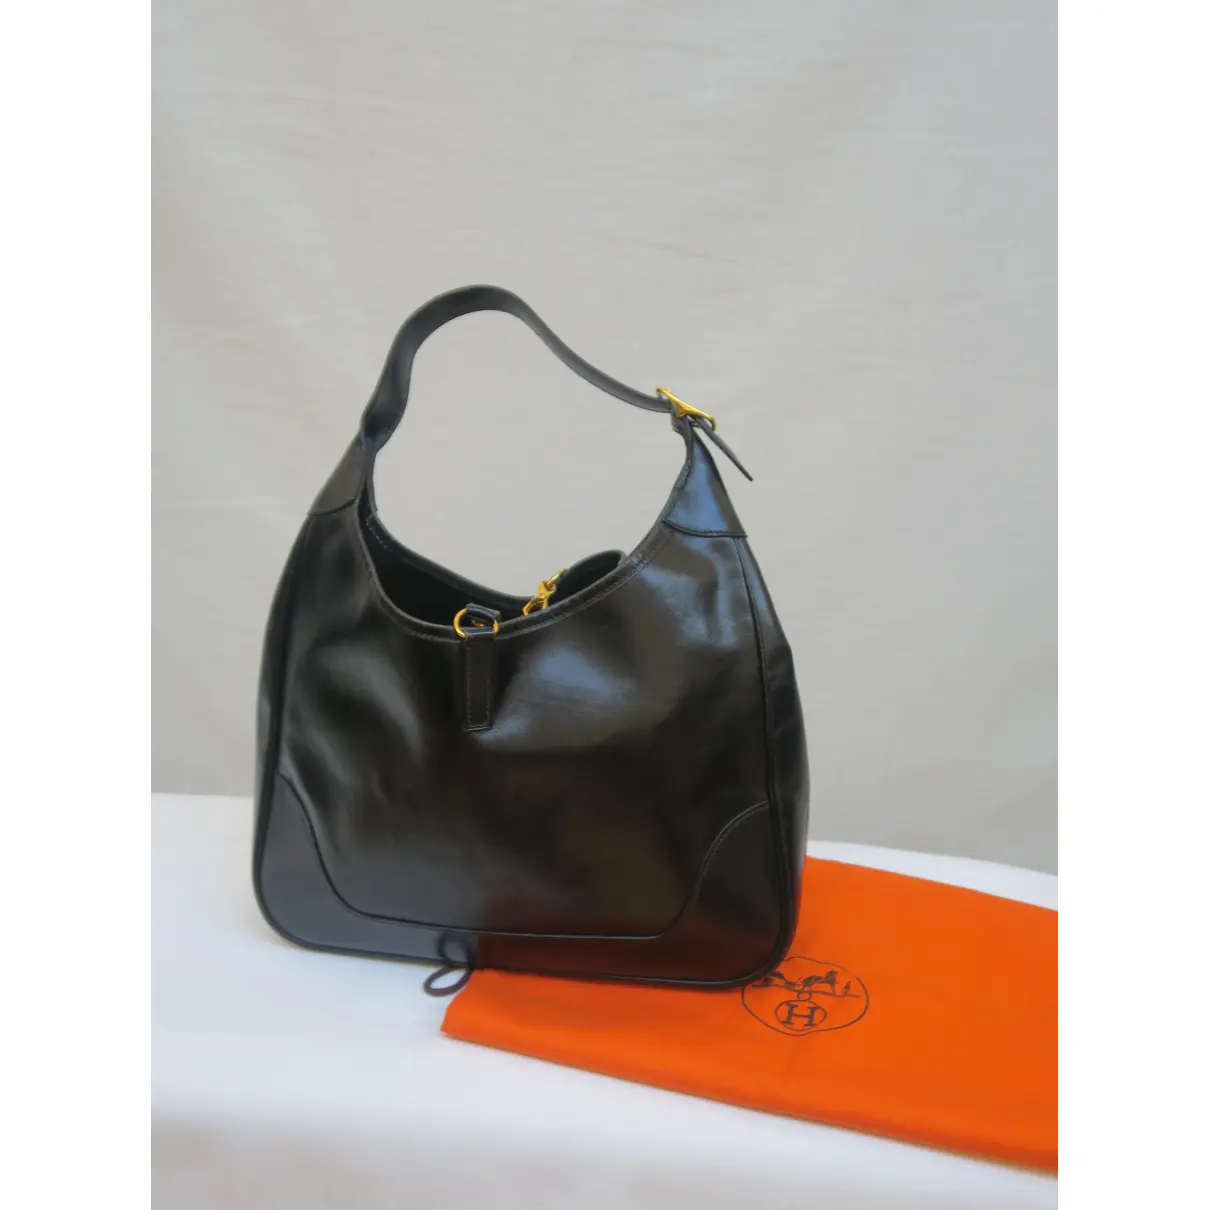 Buy Hermès Trim leather handbag online